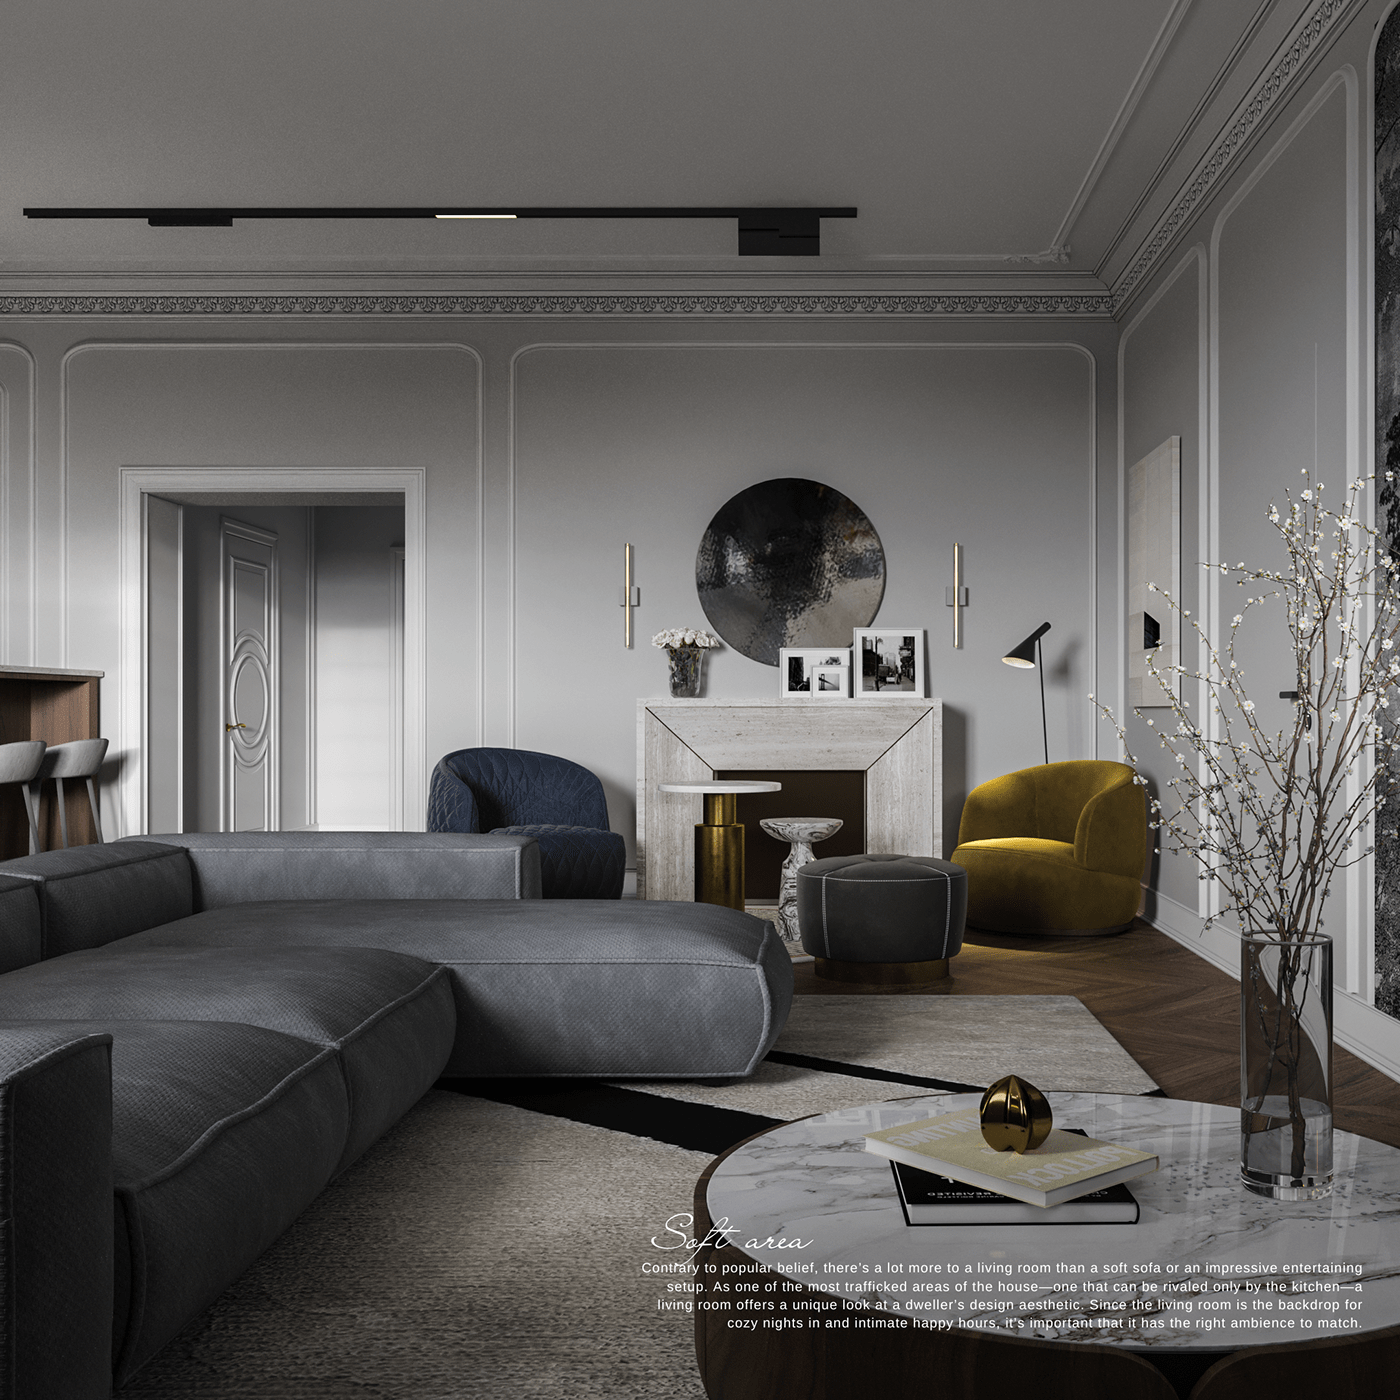 3ds max architecture corona render  interior design  kitchen living room modern Render rendering visualization